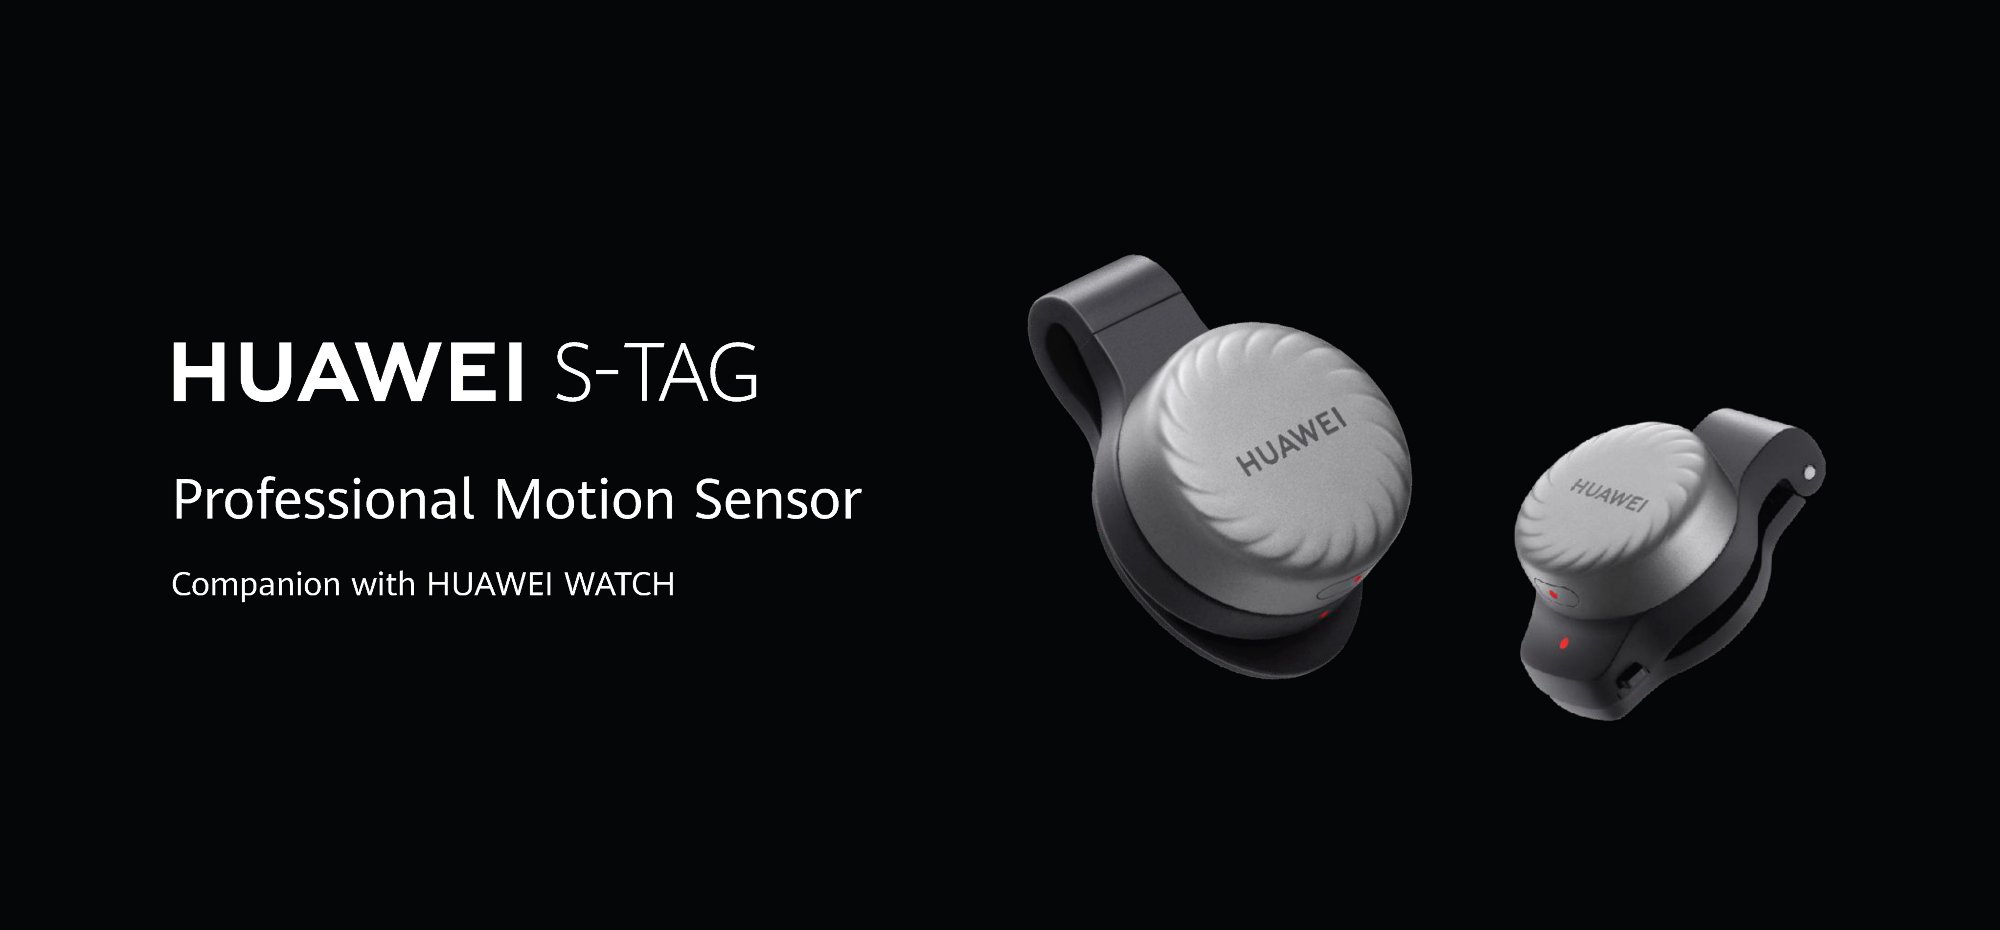 Huawei presenta S-Tag: Smart Sports Tag con sensor de movimiento profesional